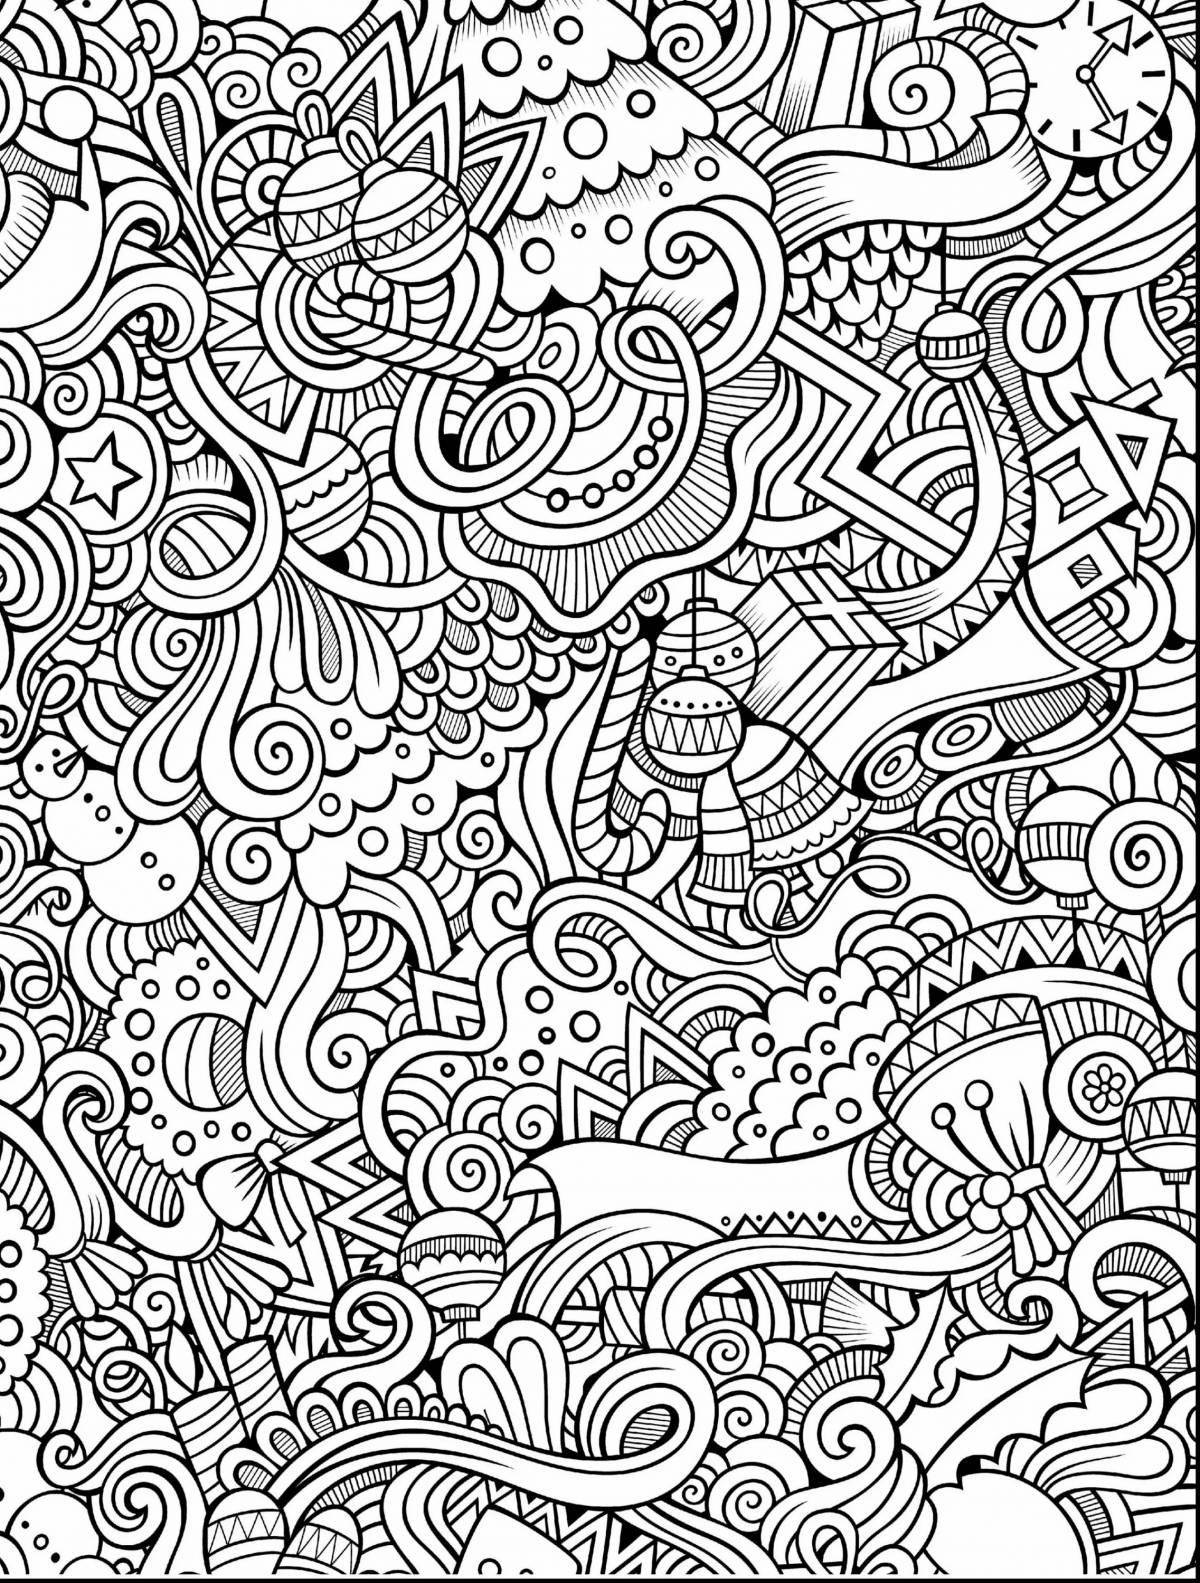 Coloring radiant doodle art antistress